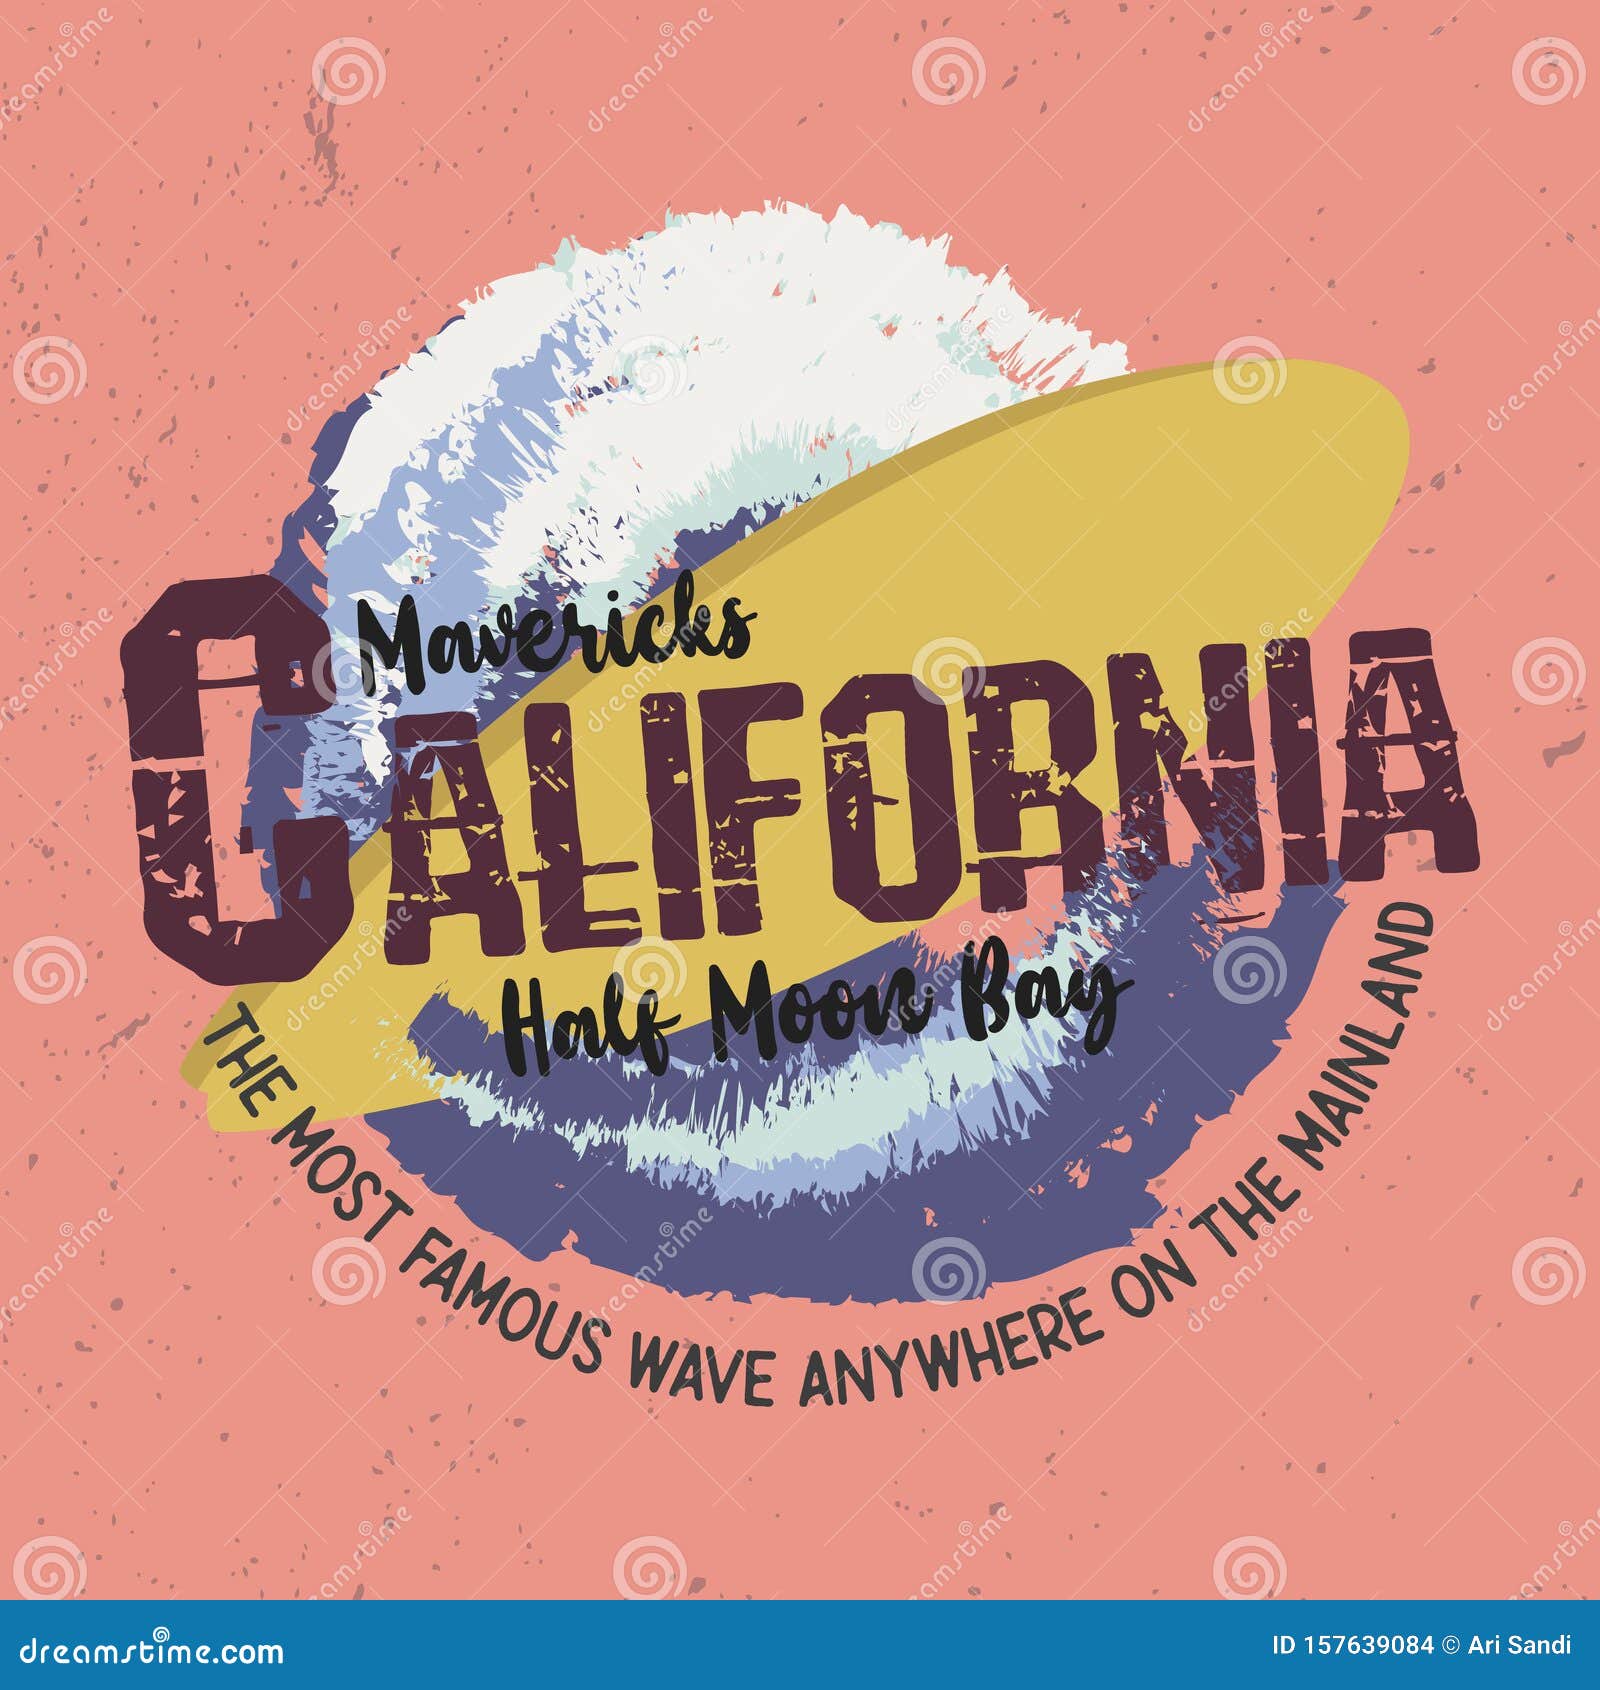 mavericks california, half moon bay. famous wave anywhere on the mainland. trendy surfing slogan for t-shirt.